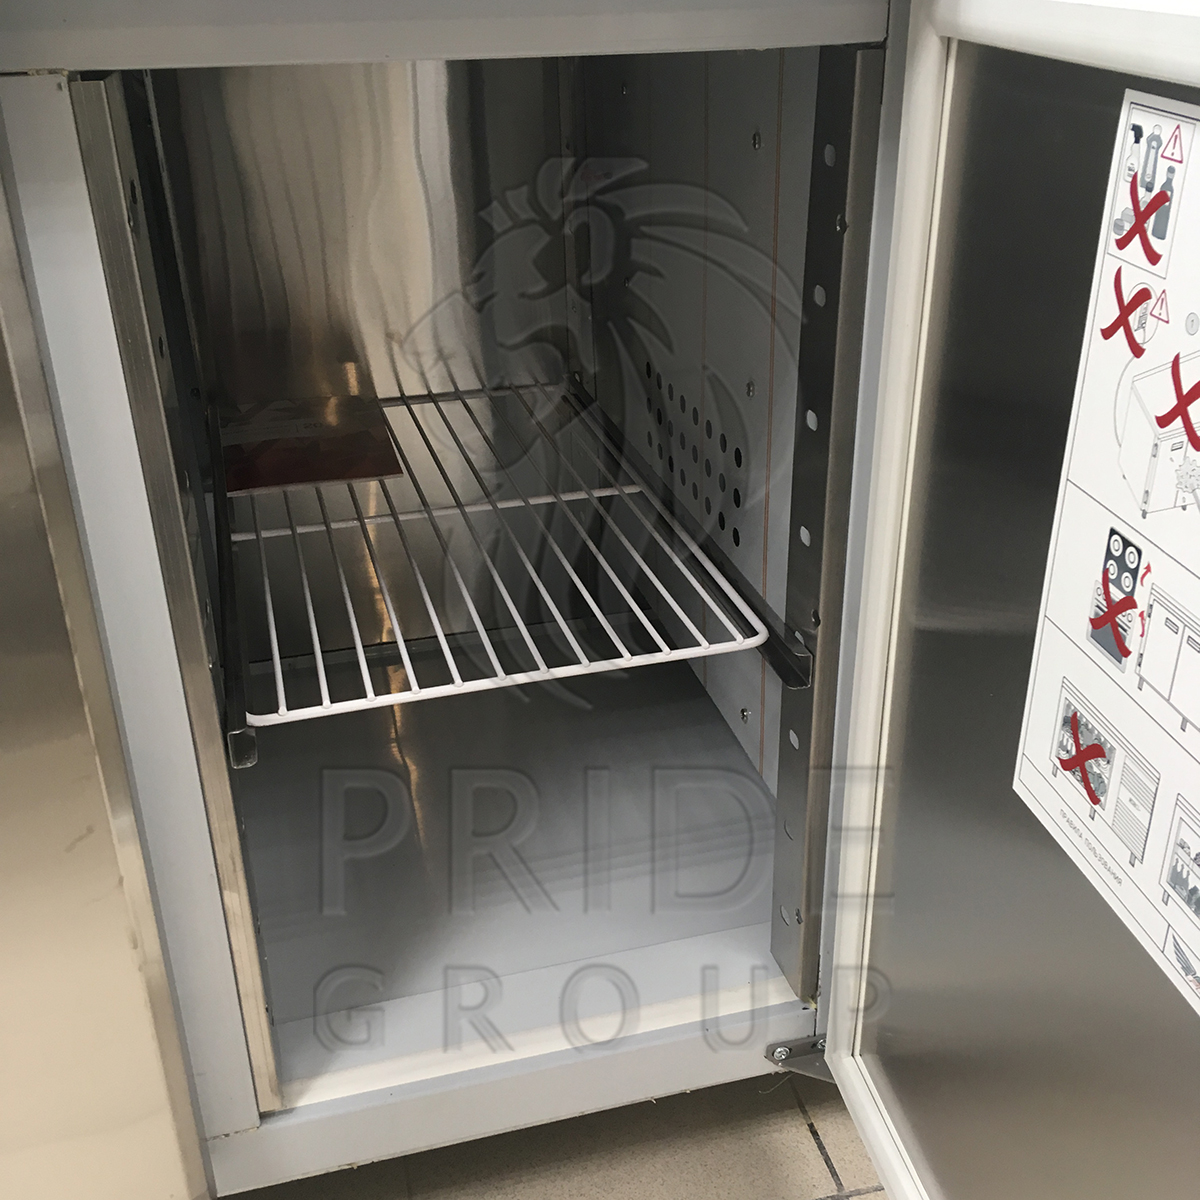 картинка Стол холодильный Finist СХСос-600-3 охлаждаемая столешница 1810х600х850 мм